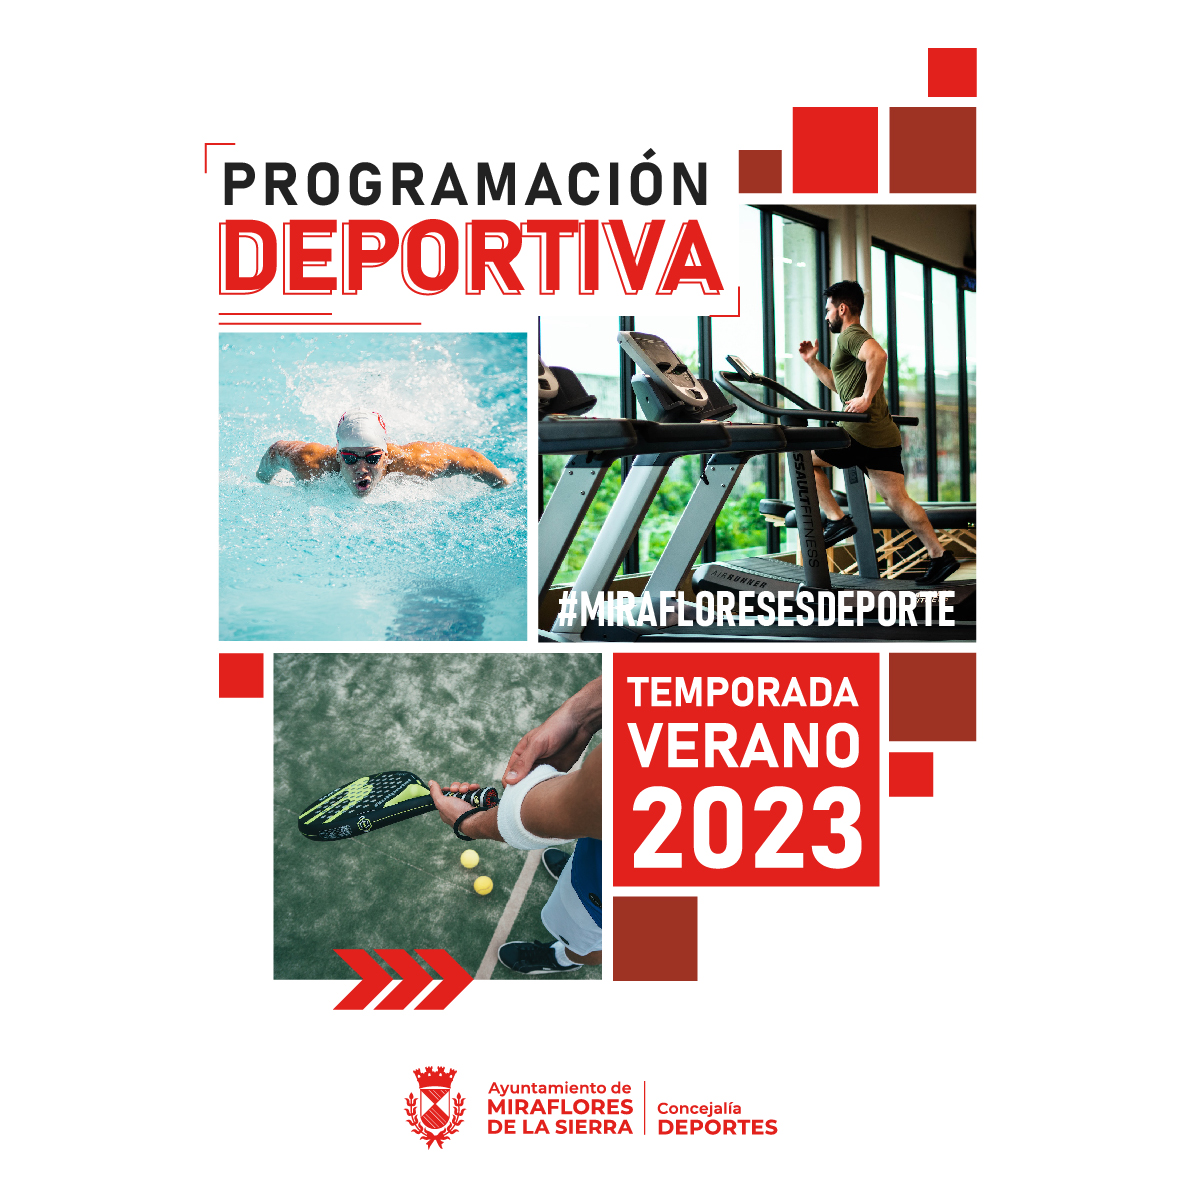 PROGRAMACIÓN DEPORTIVA TEMPORADA VERANO 2023